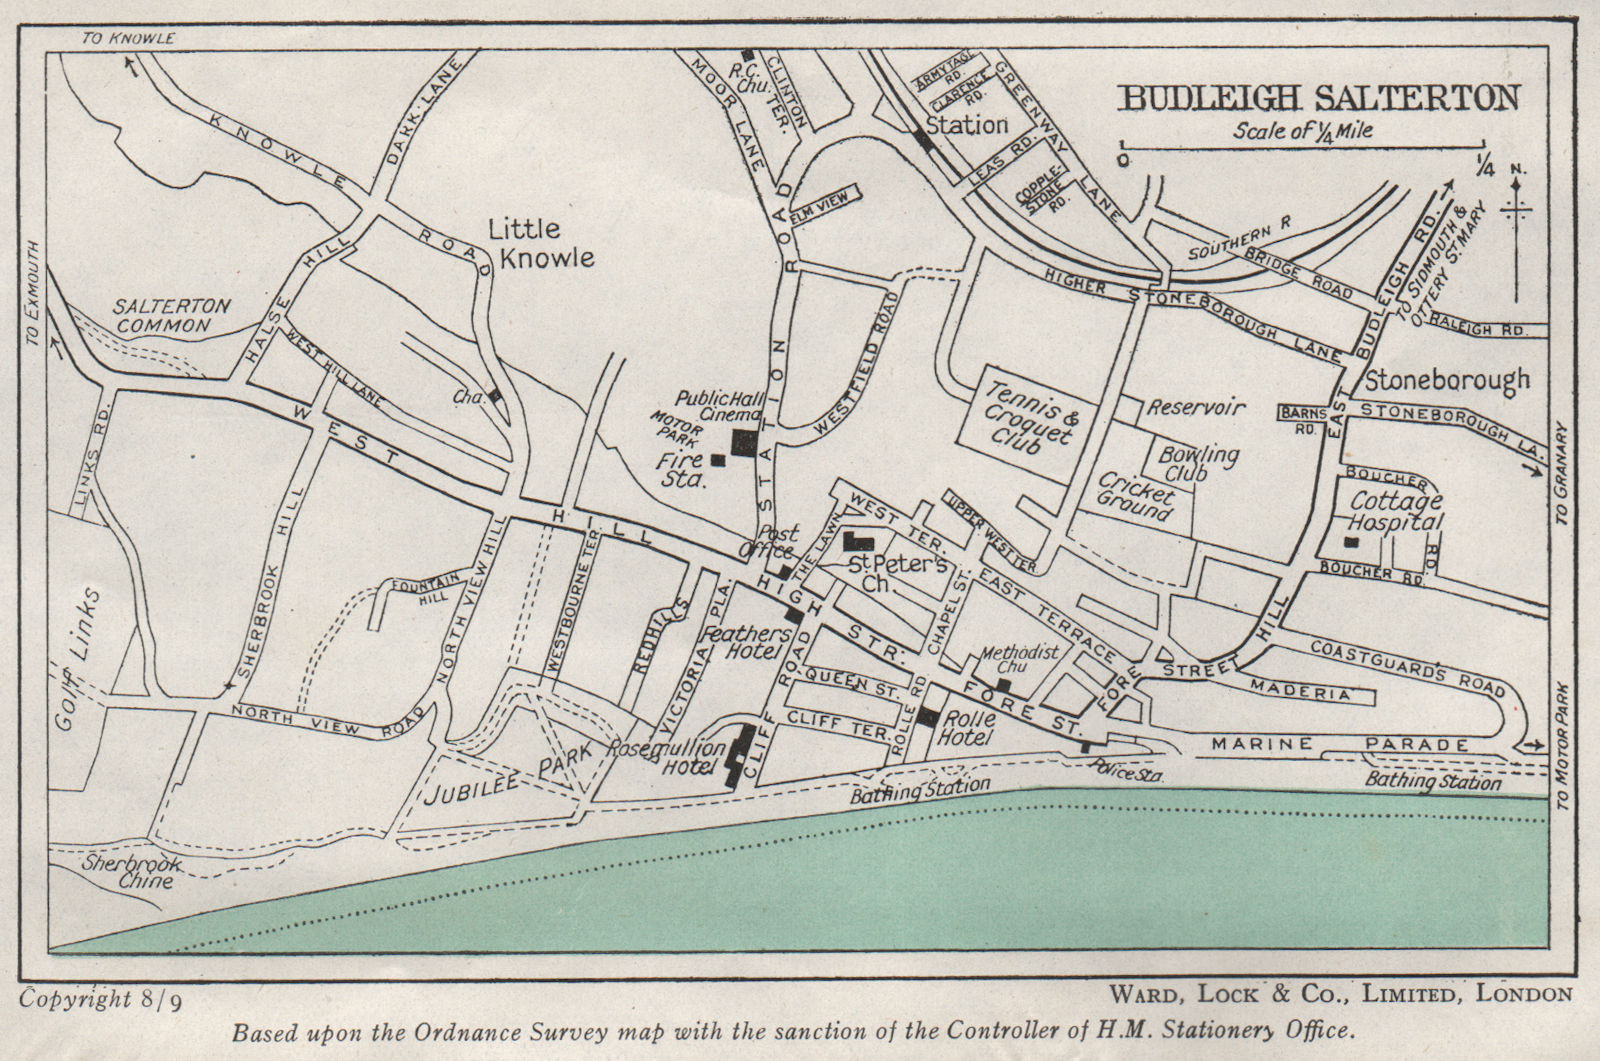 Associate Product BUDLEIGH SALTERTON vintage town/city plan. Devon. WARD LOCK 1948 old map